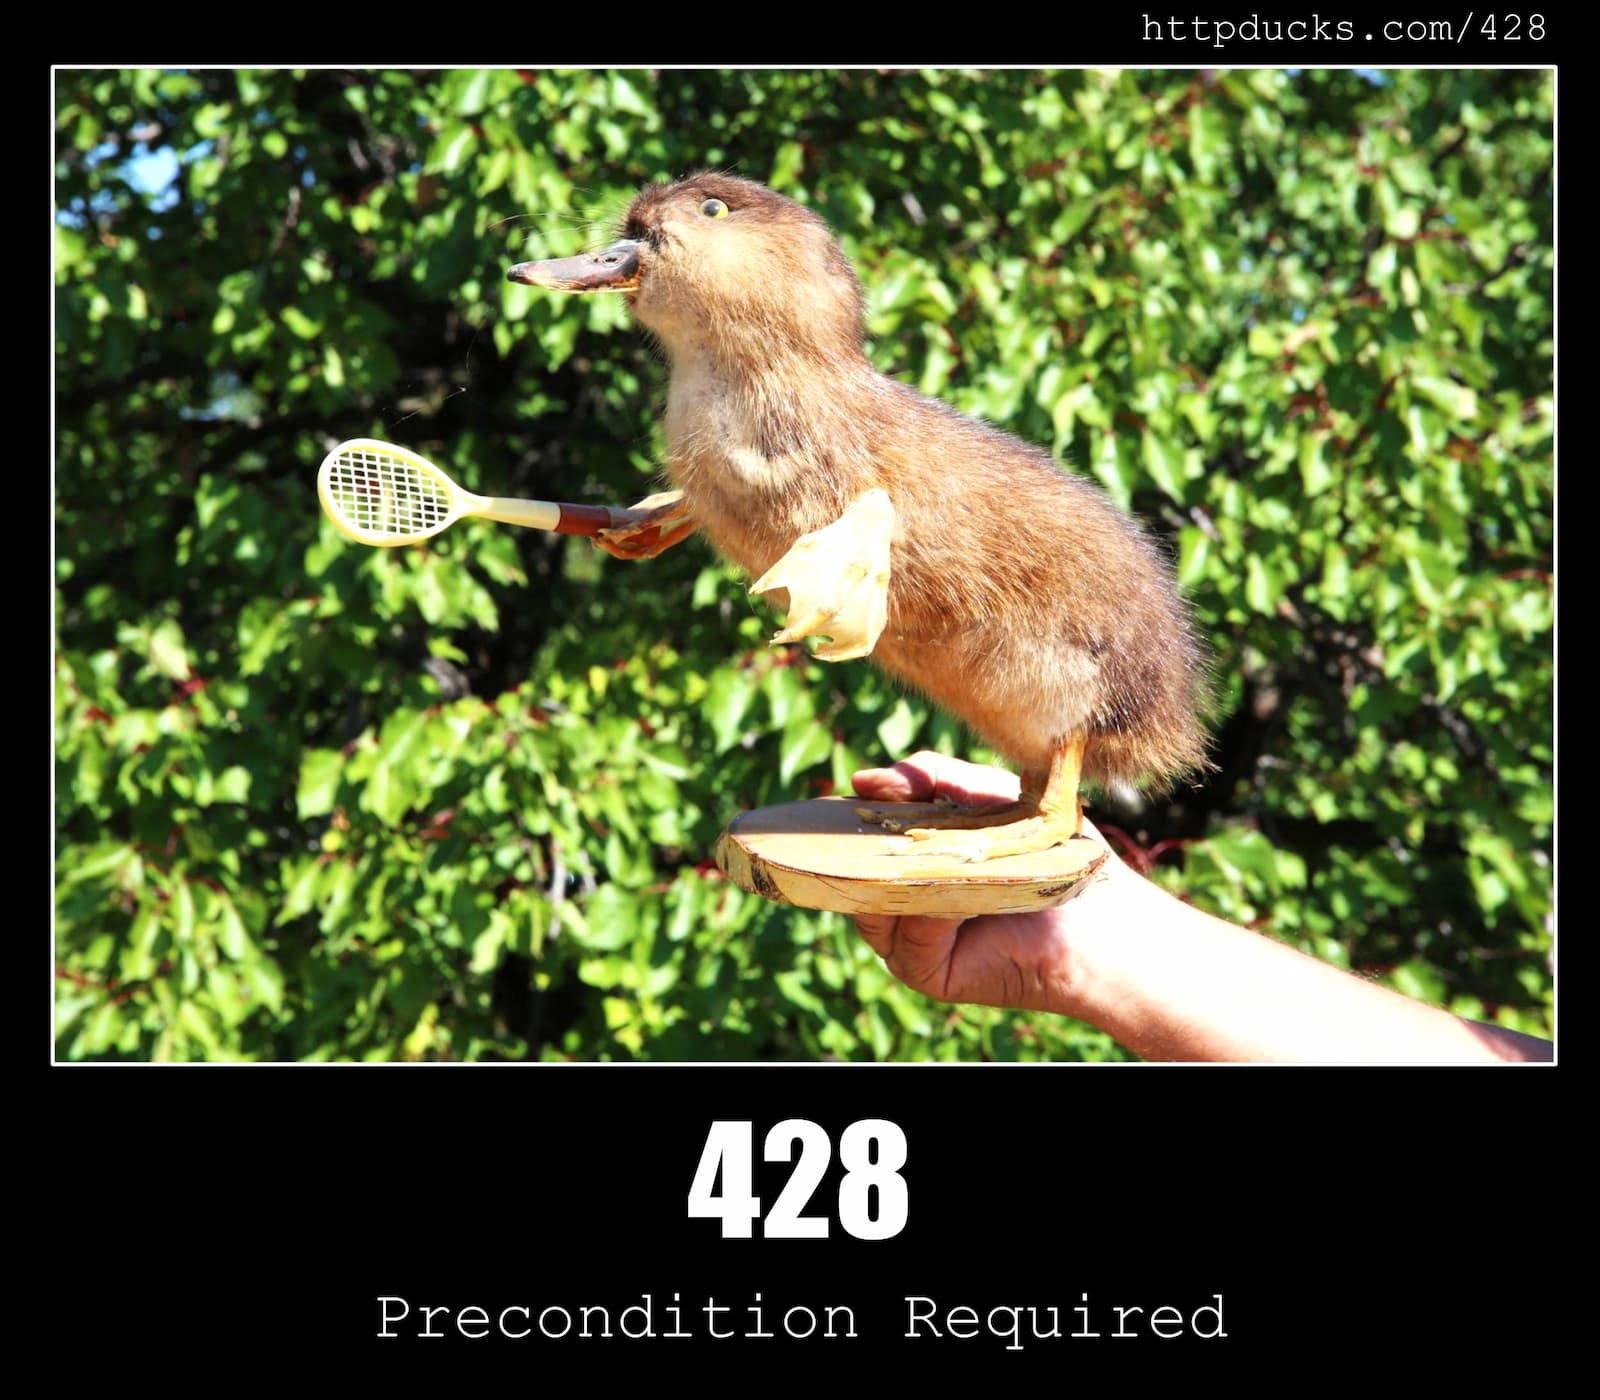 HTTP Status Code 428 Precondition Required & Ducks